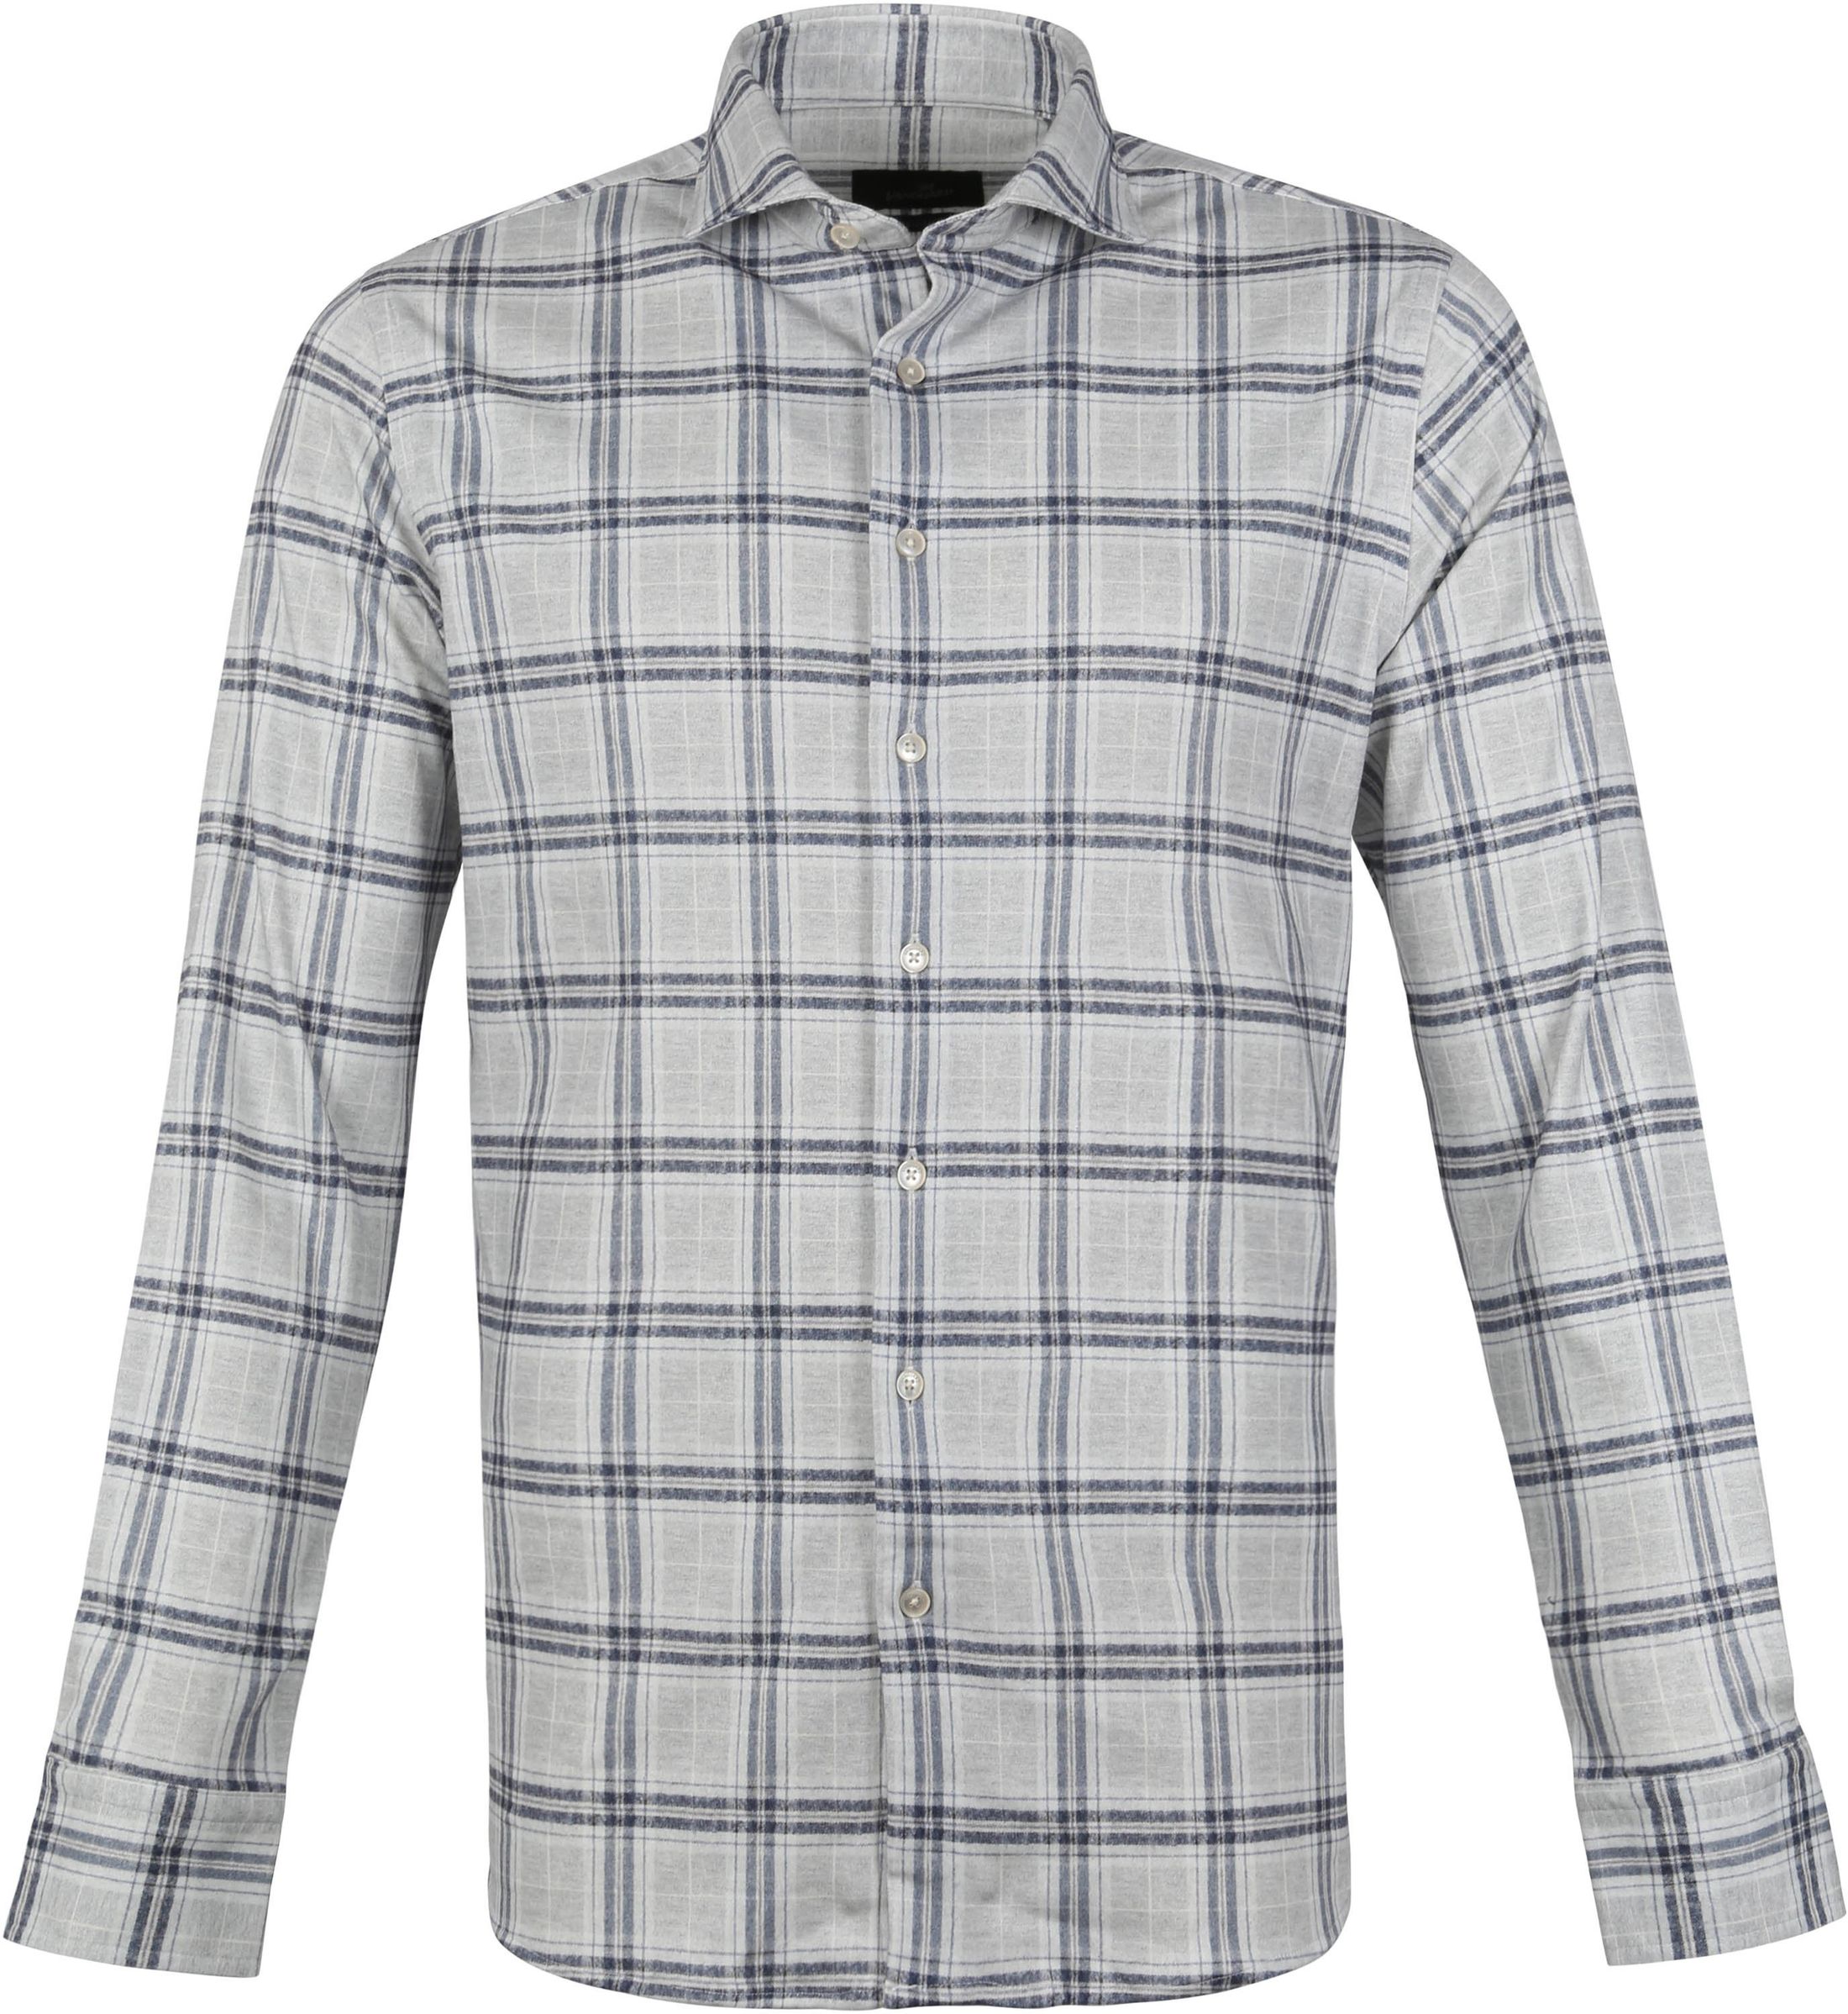 Vanguard Shirt Melange Check Blue Grey size XXL